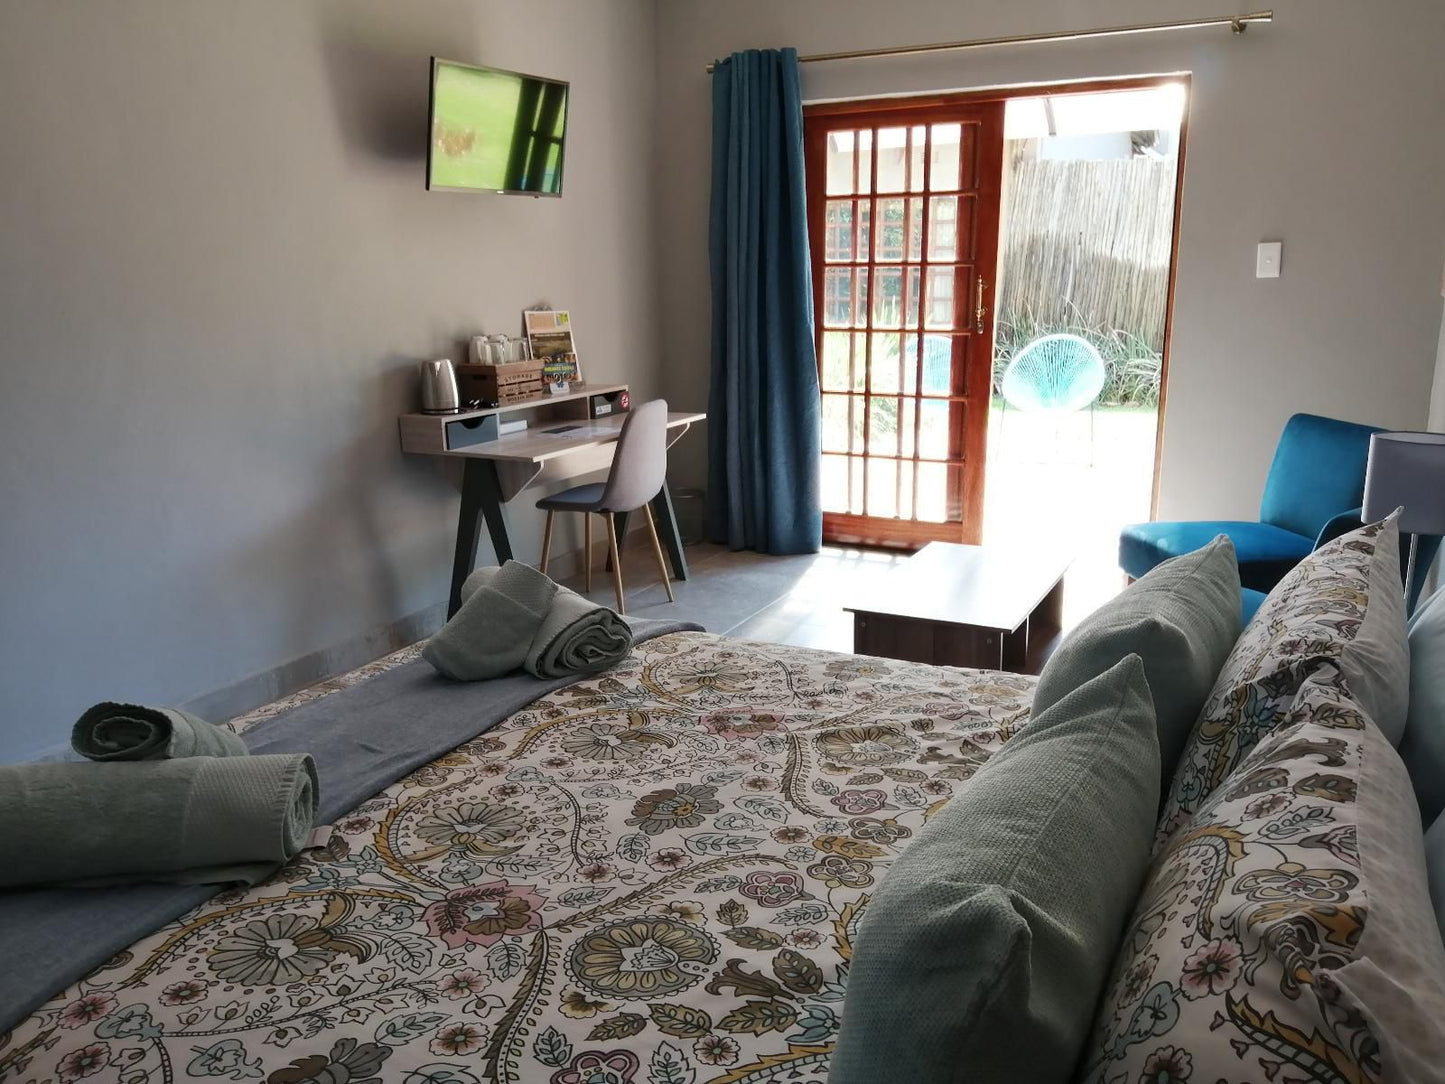 Ikamu S Lodge Verwoerd Park Johannesburg Gauteng South Africa Unsaturated, Bedroom